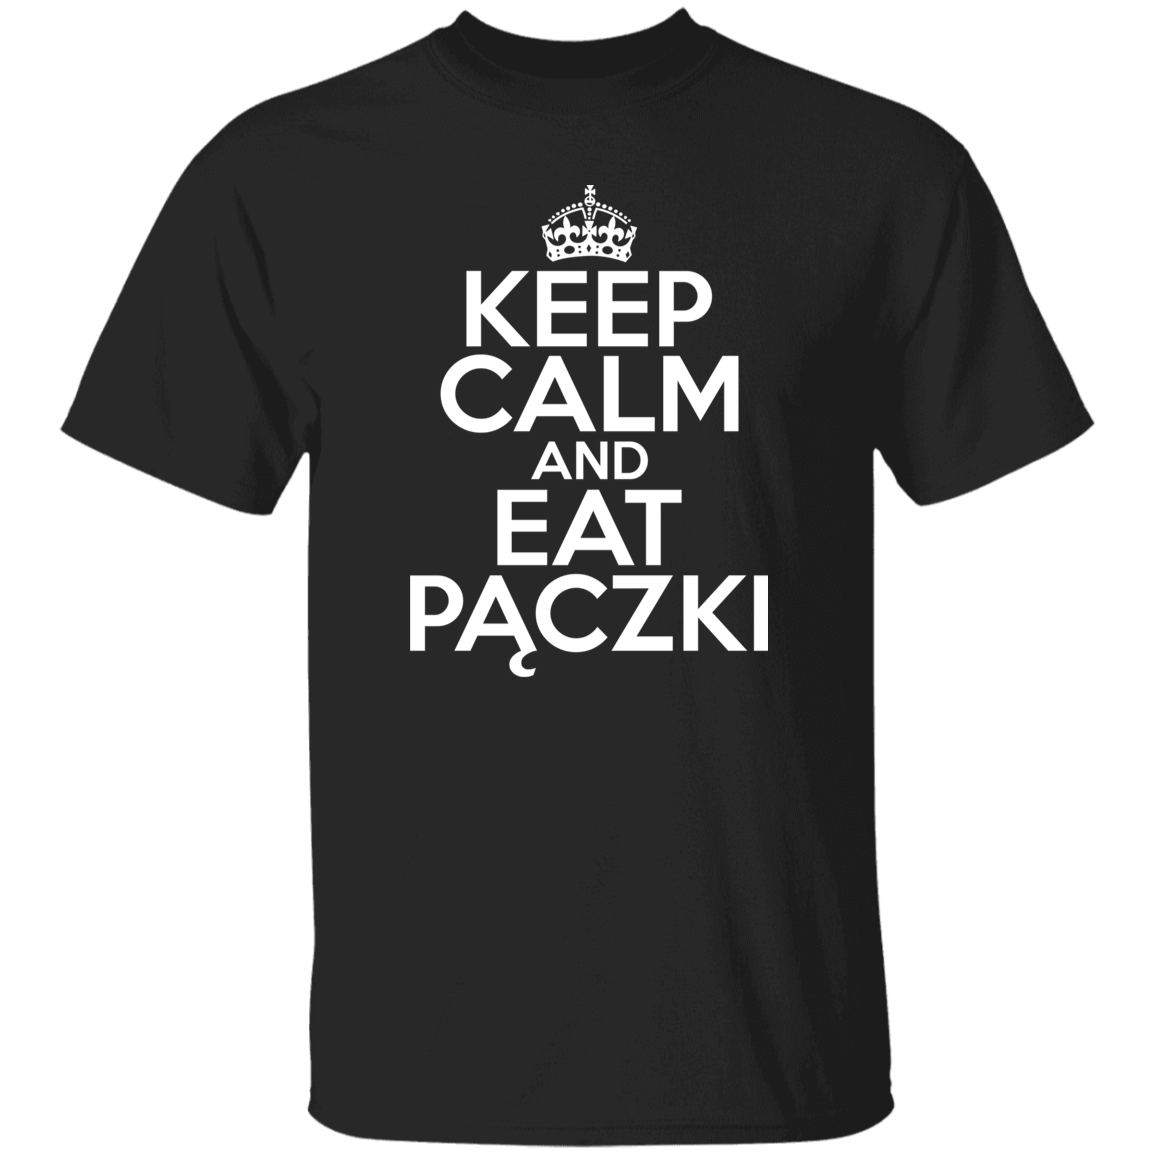 Keep Calm And Eat Paczki Apparel CustomCat G500 5.3 oz. T-Shirt Black S